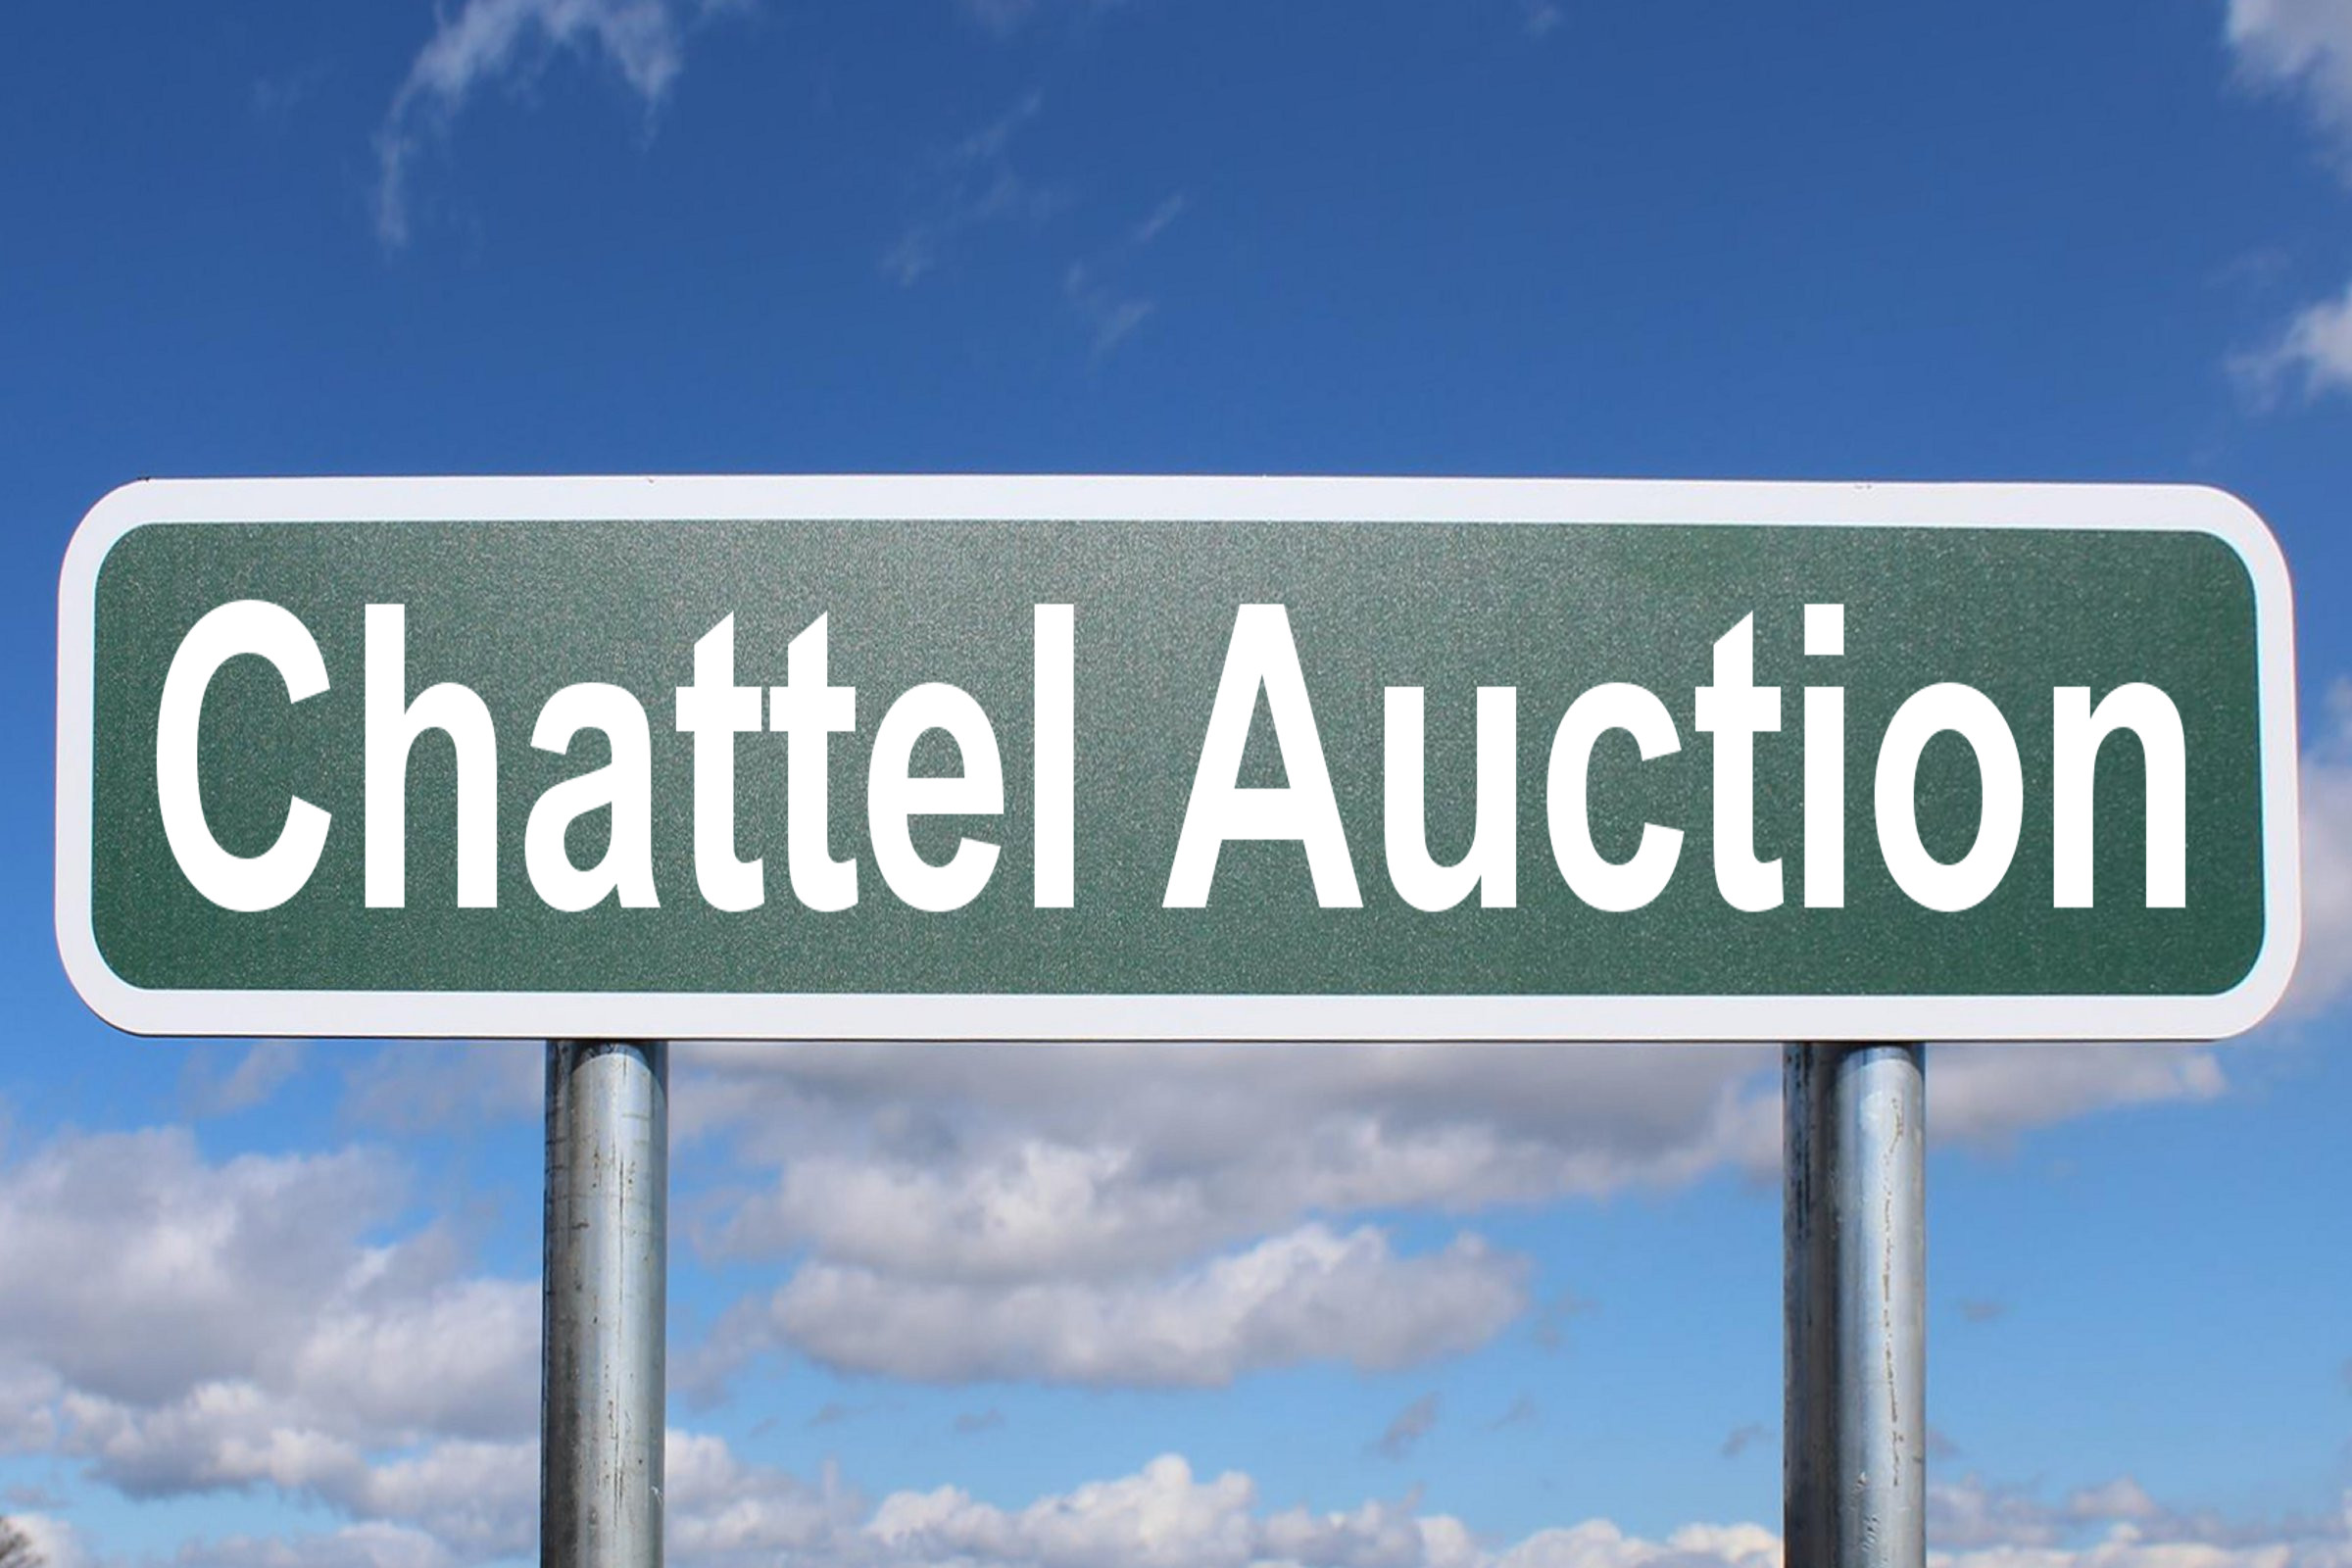 chattel auction